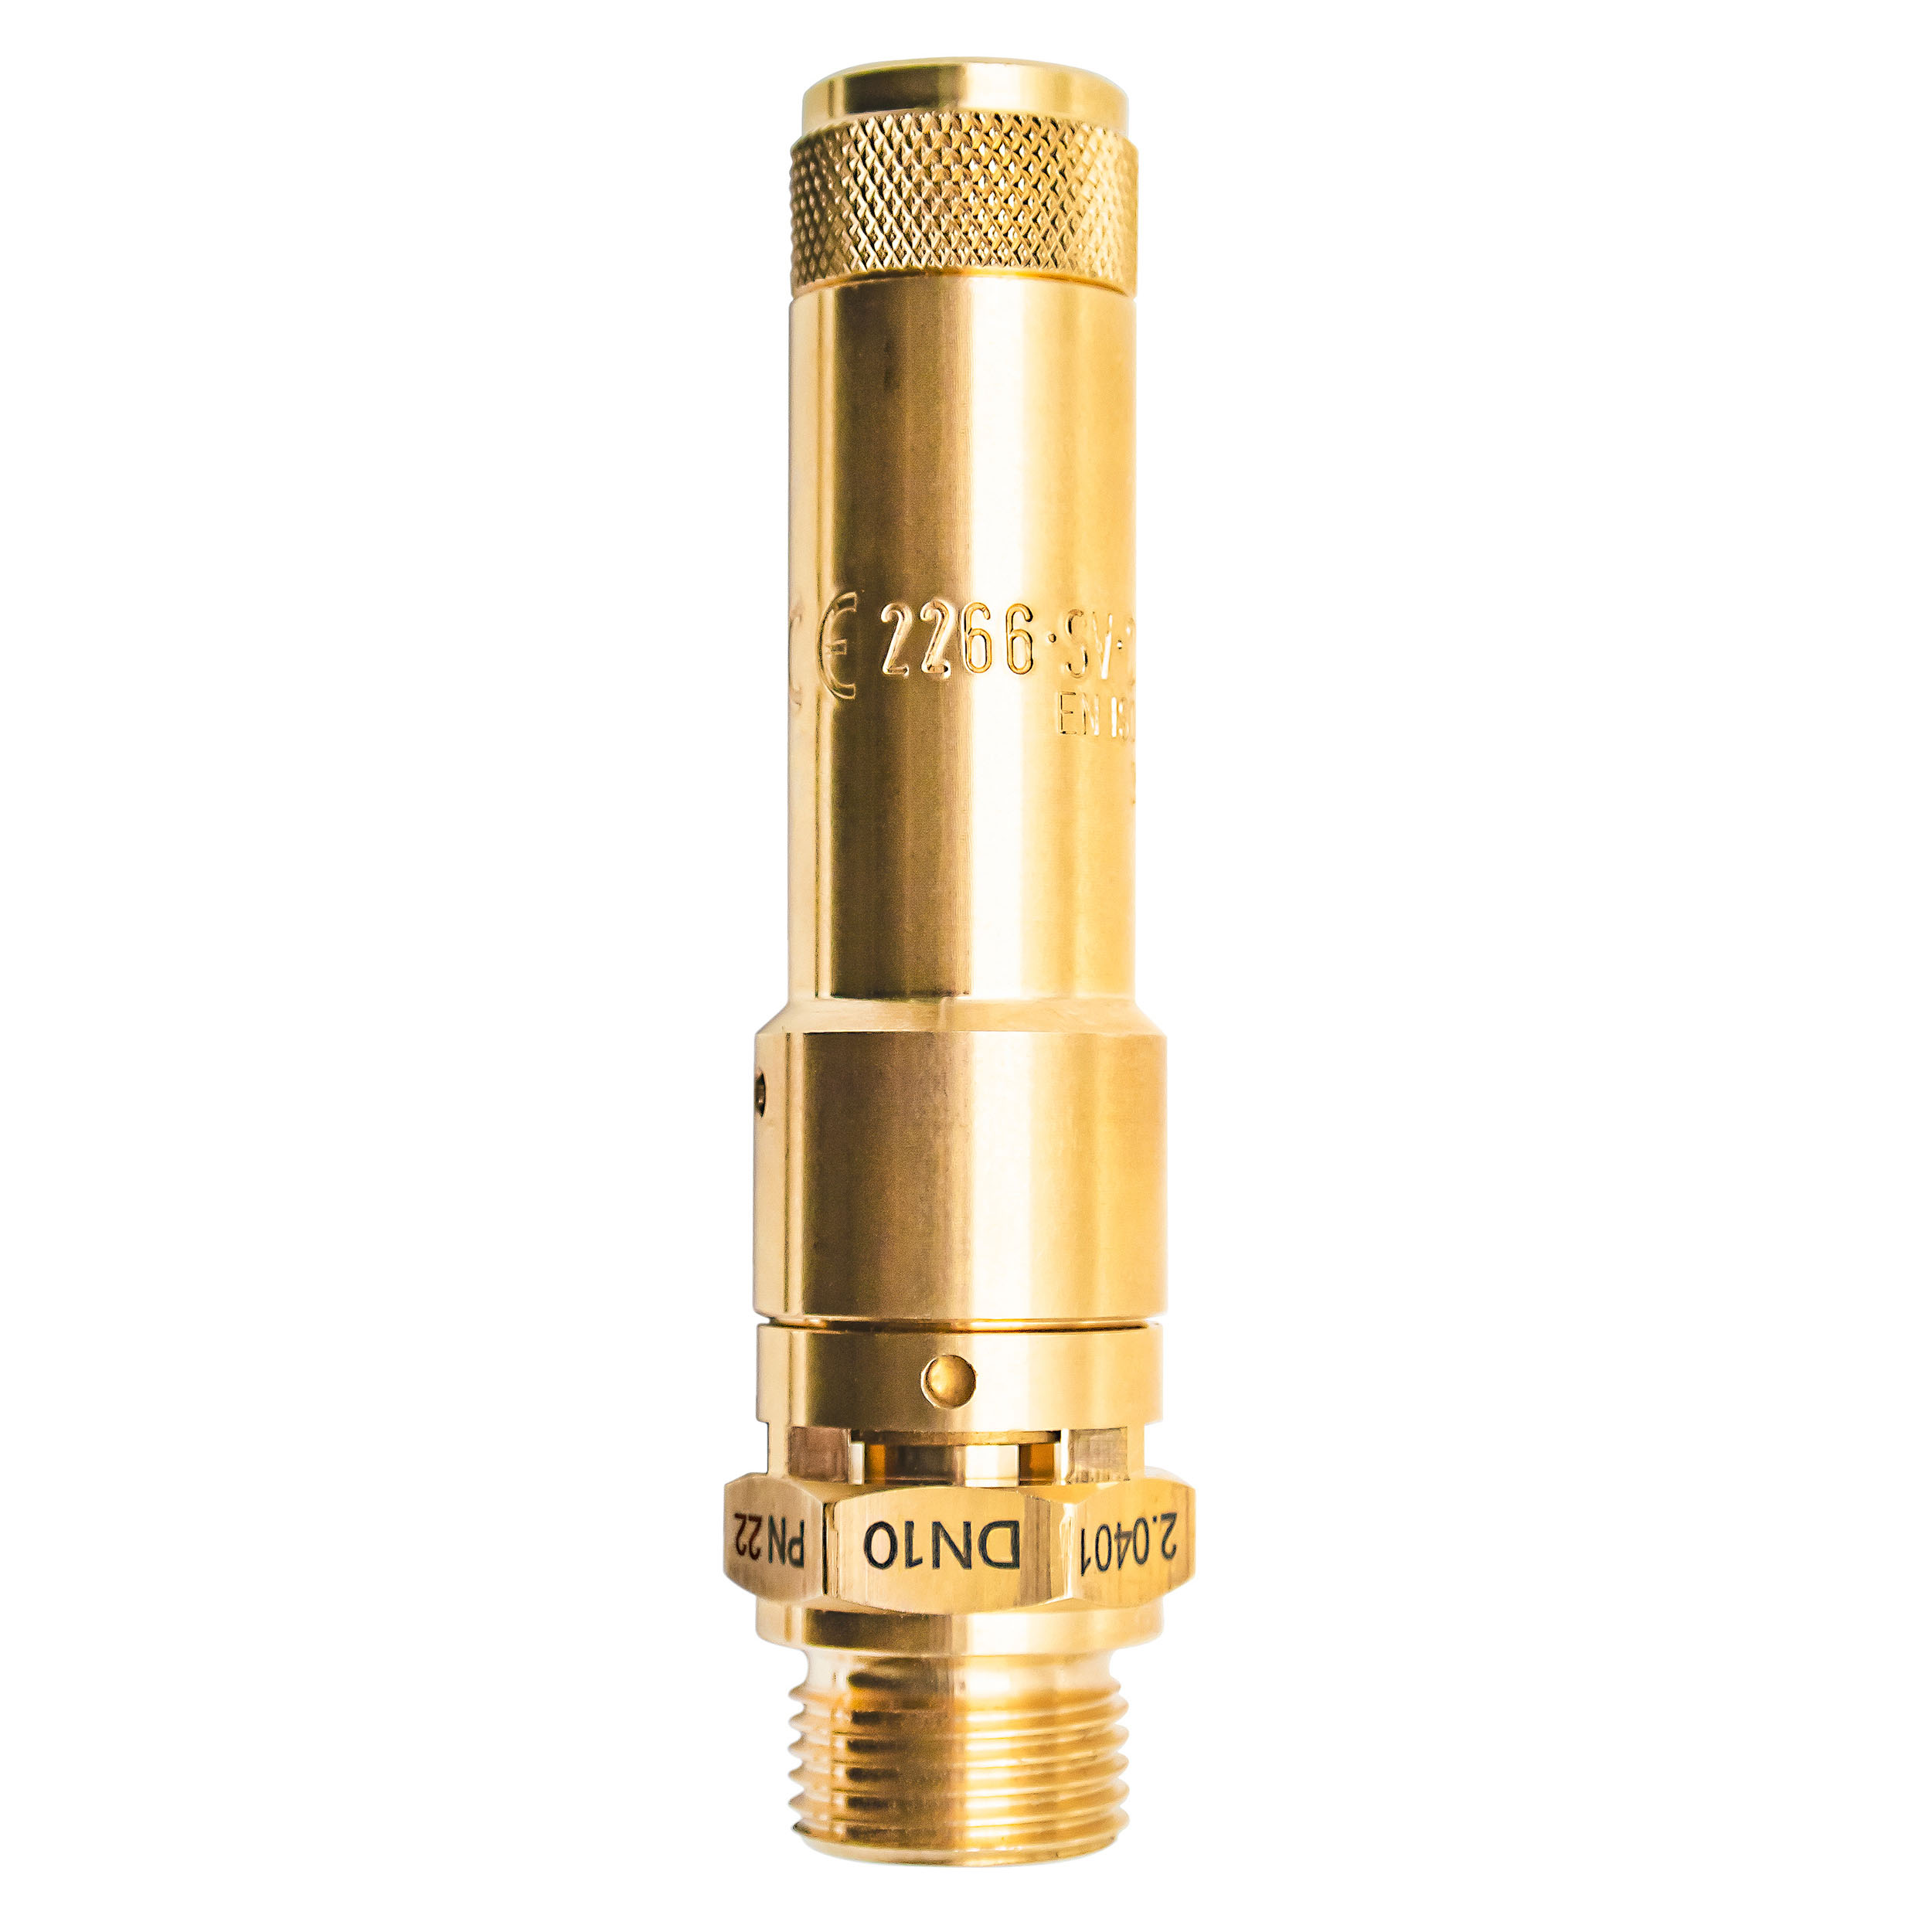 Component-tested safety valve DN 10, G½, pressure: 2-3.6 bar